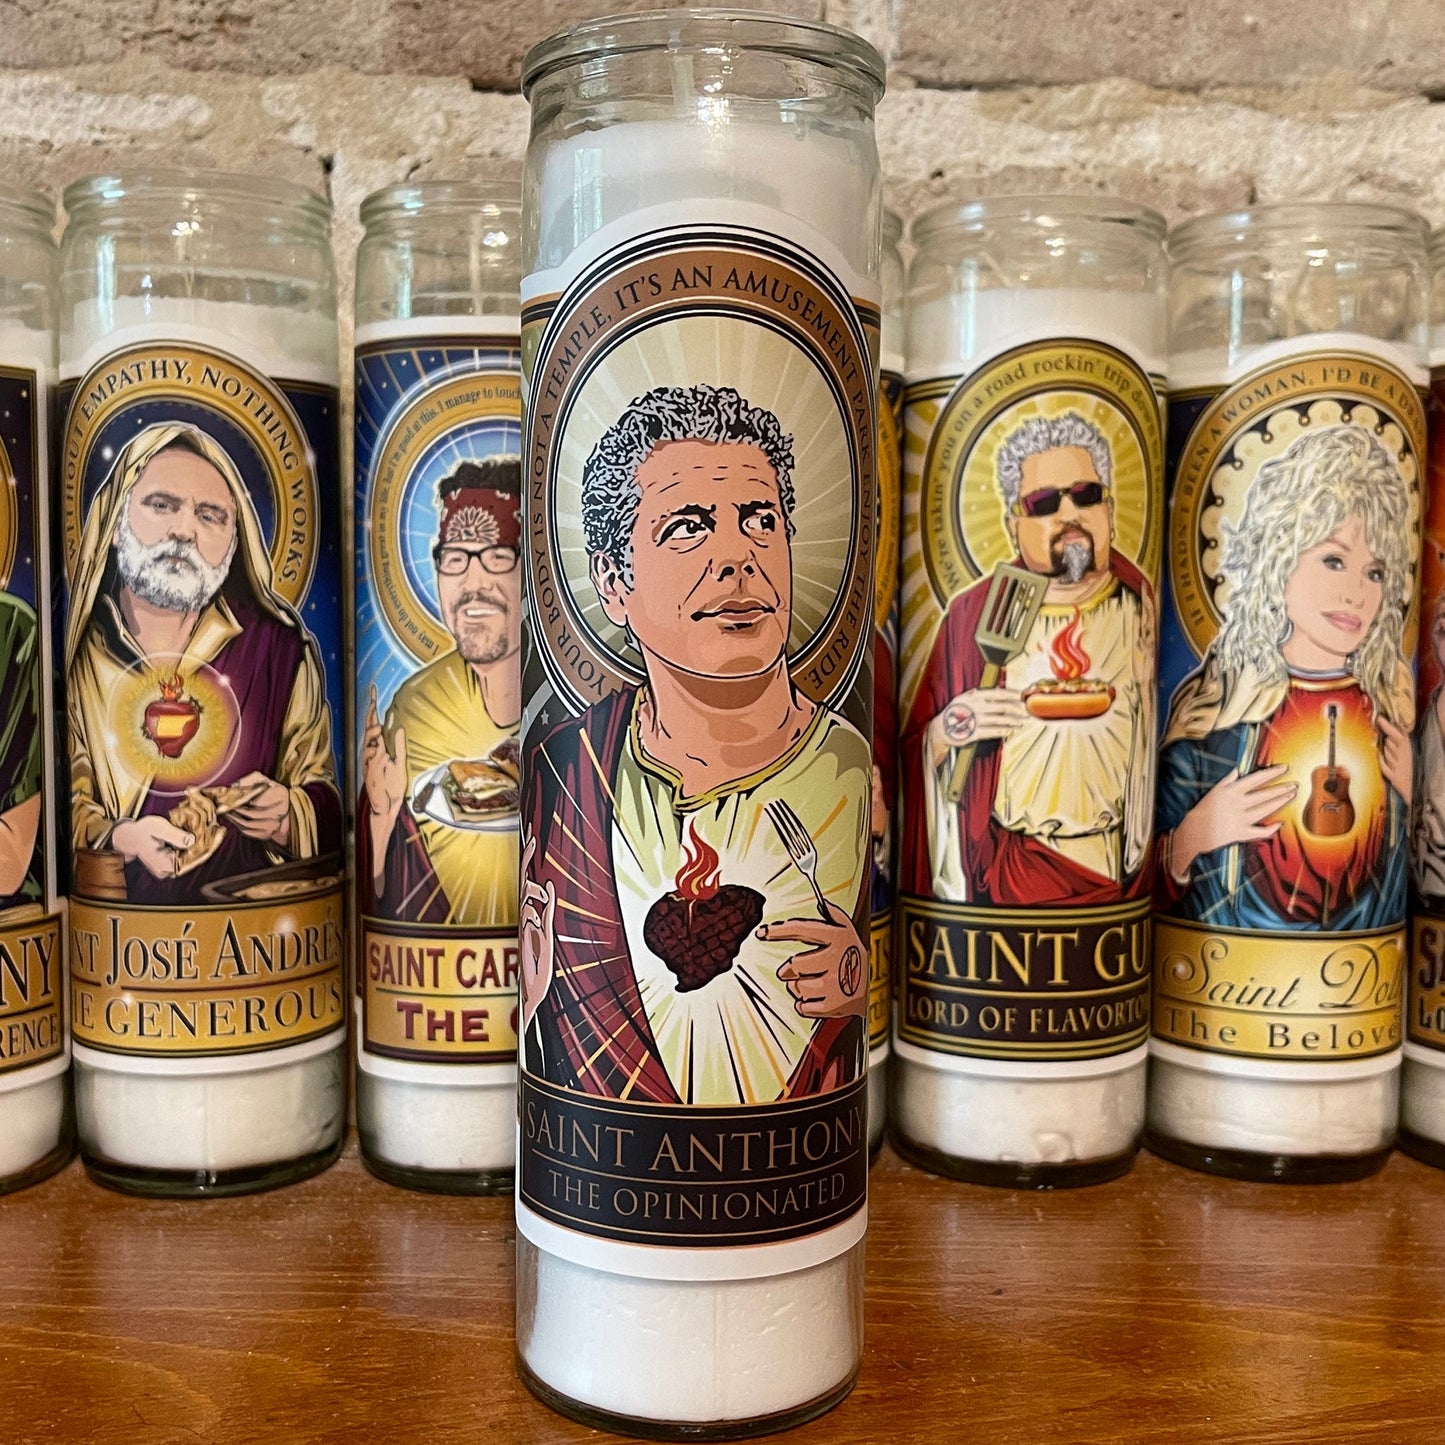 Saint Anthony The Opinionated Candle Cleaverandblade.com